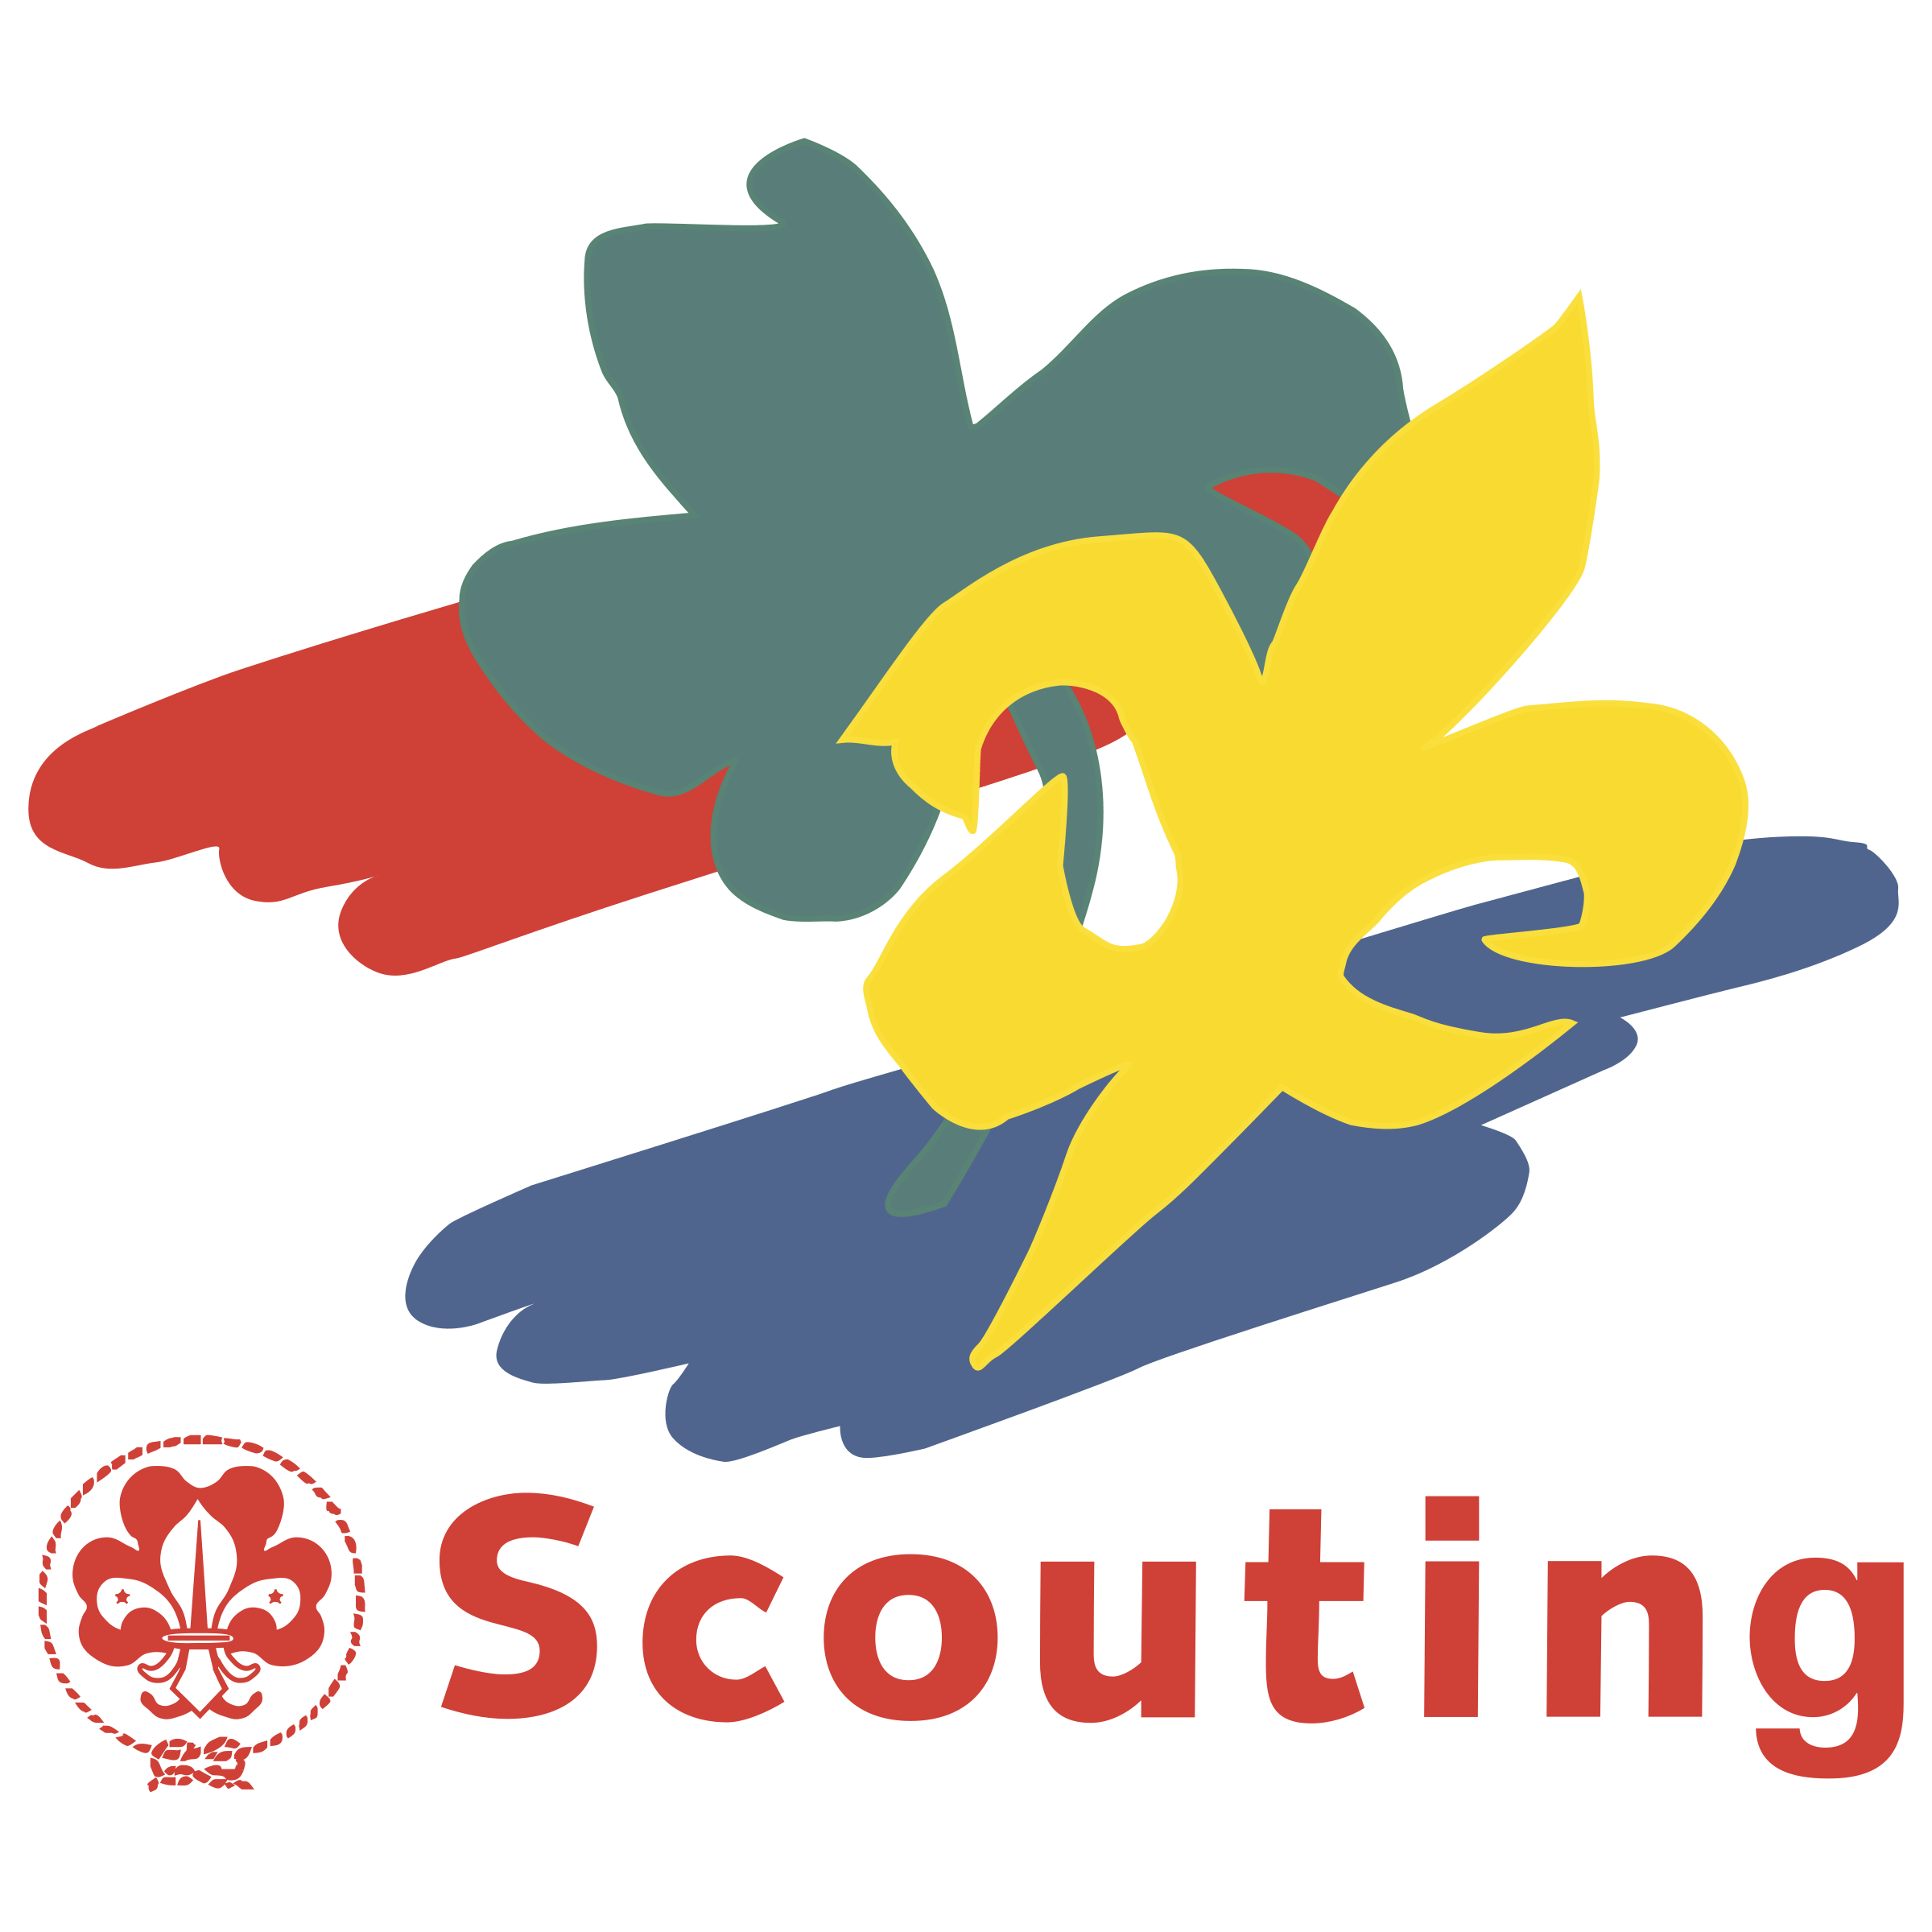 Scouting Logo - Scouting Logo PNG Transparent & SVG Vector - Freebie Supply